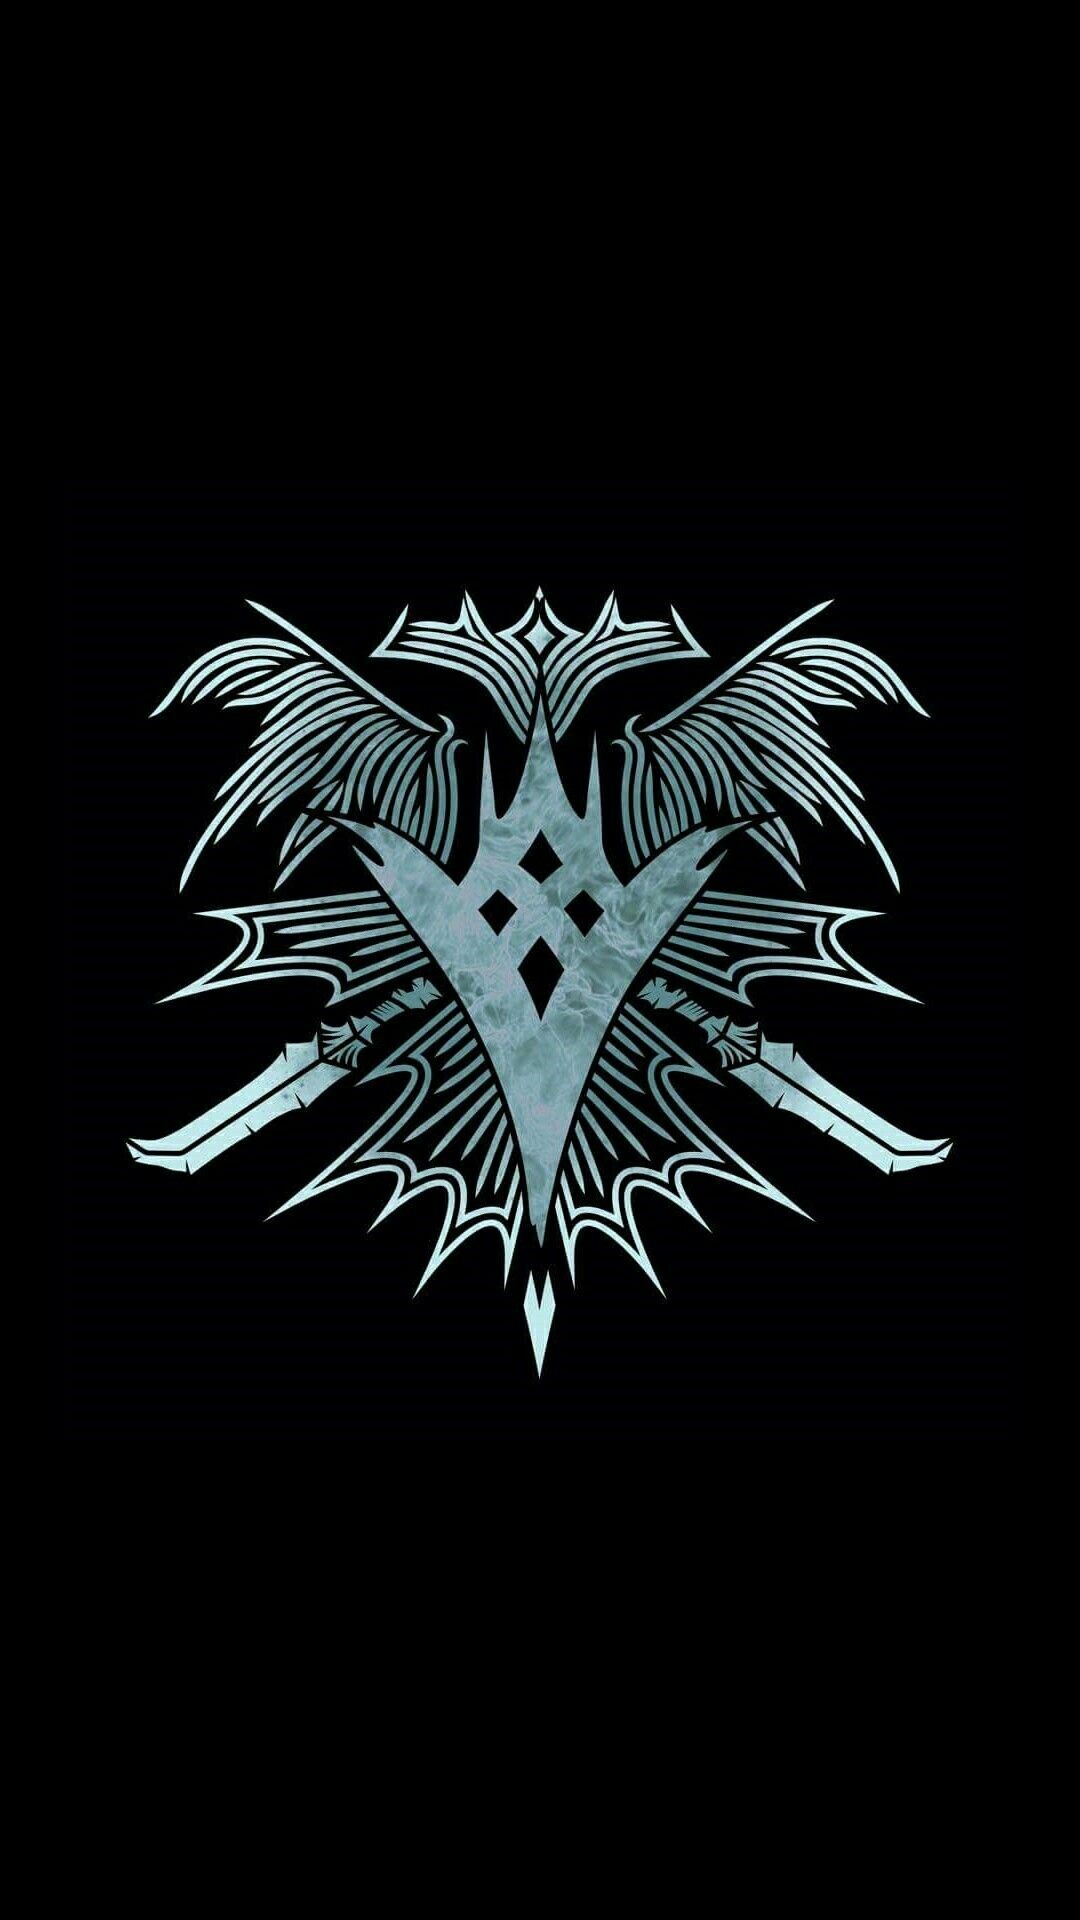 Destiny: The symbol of Oryx, The Taken King. 1080x1920 Full HD Wallpaper.